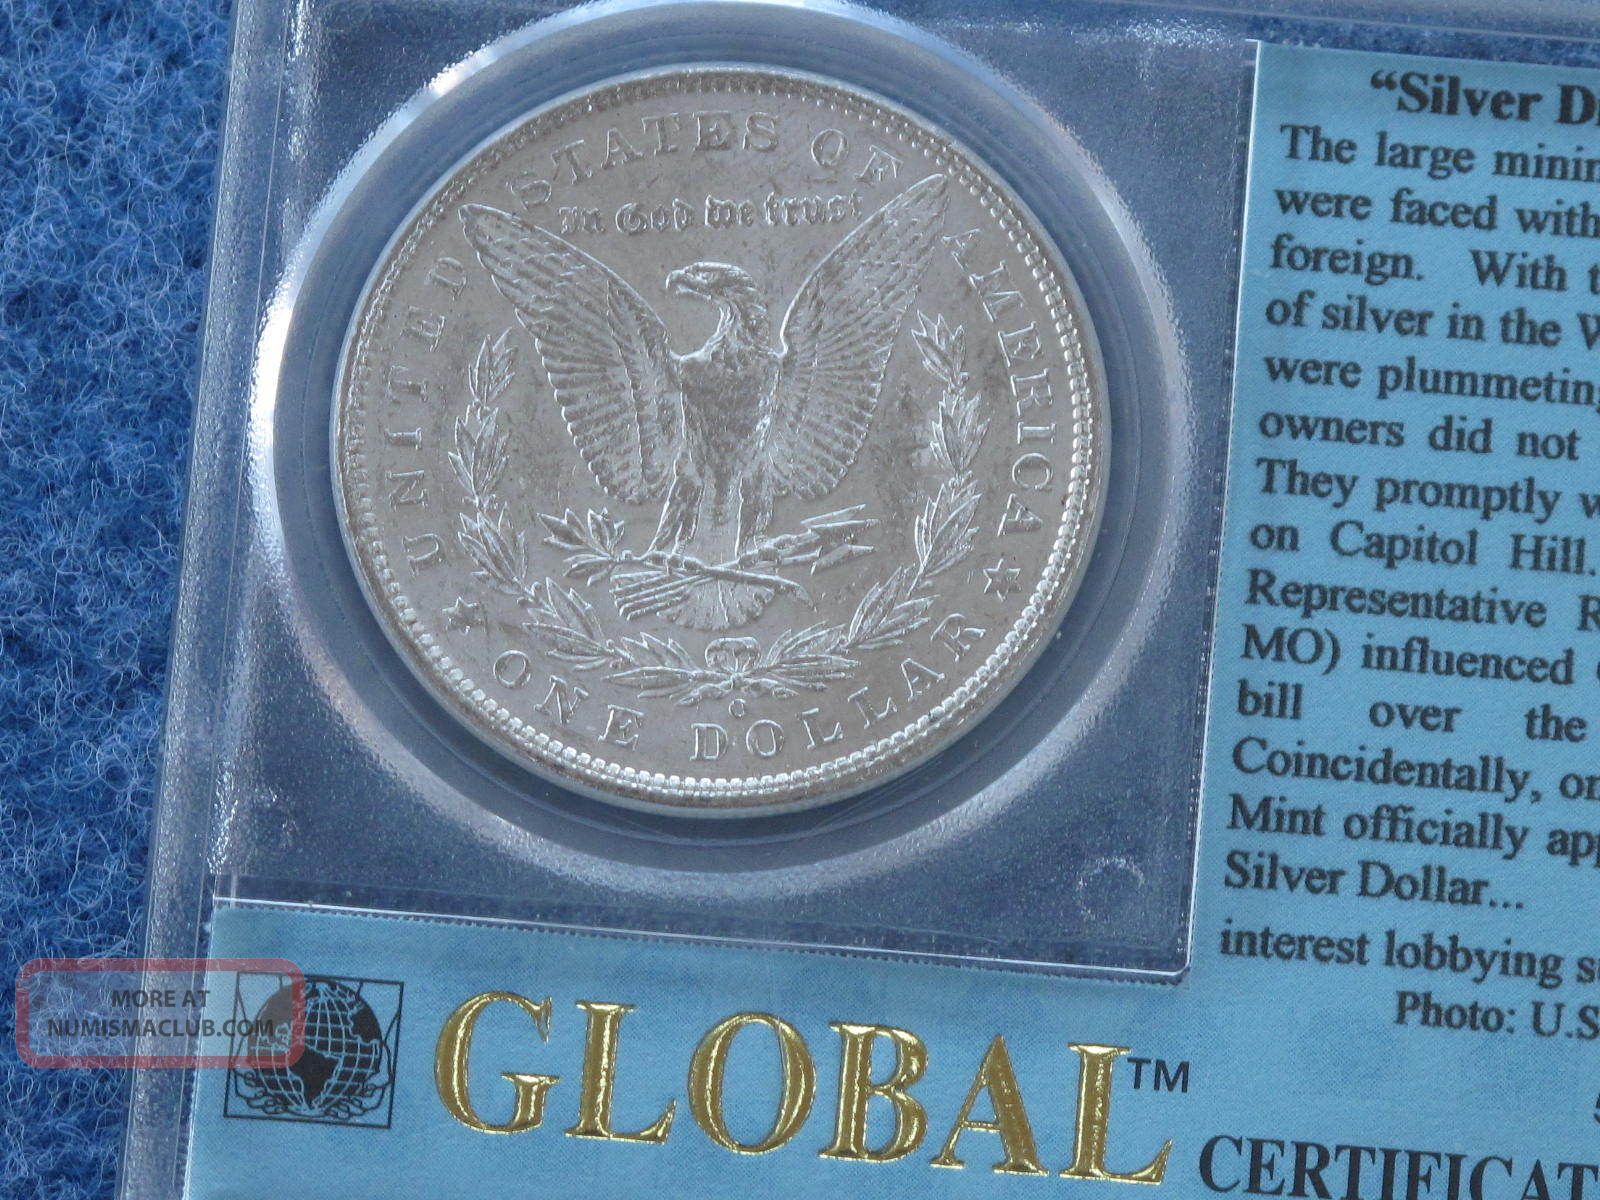 1904 - O Morgan Silver Dollar Gem Brilliant Uncirculated E0288